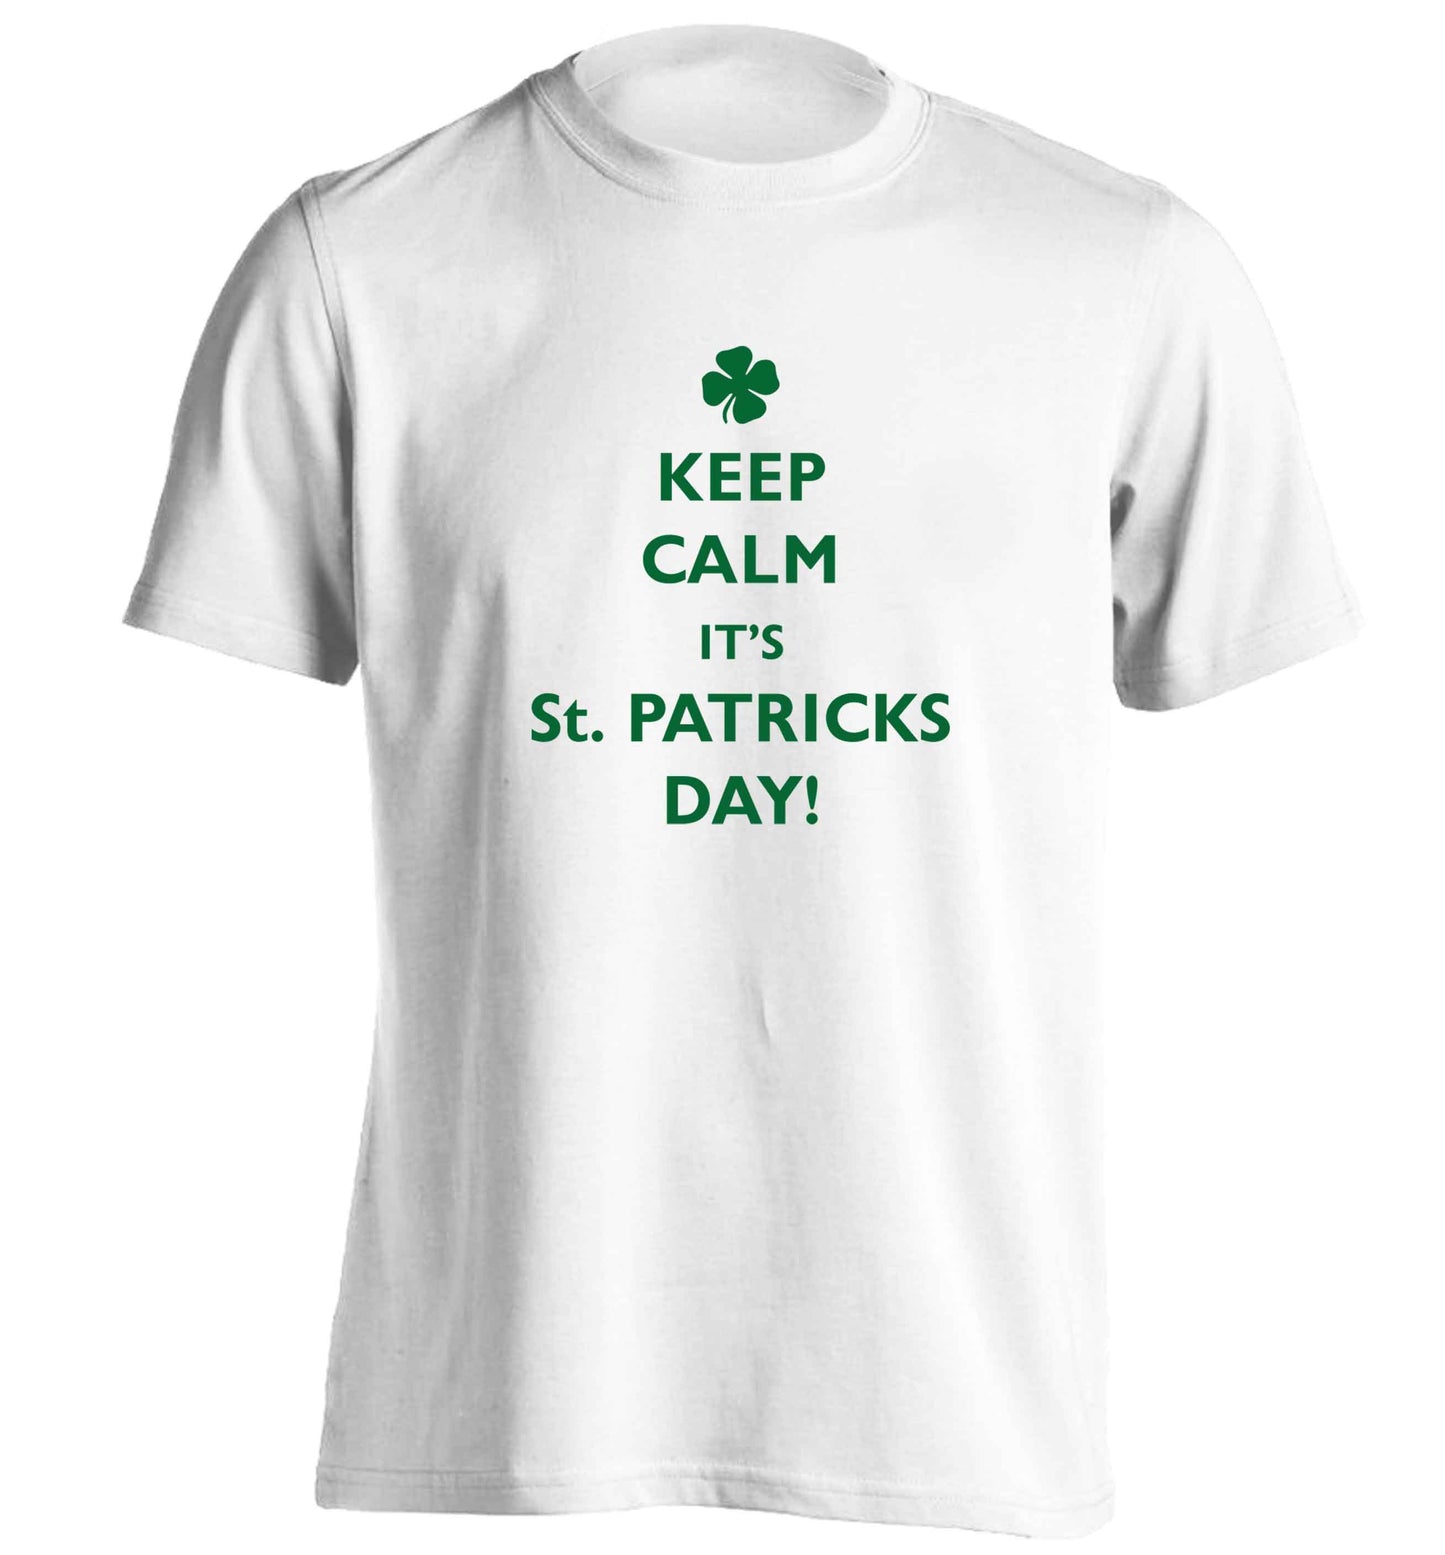 Keep calm it's St.Patricks day adults unisex white Tshirt 2XL